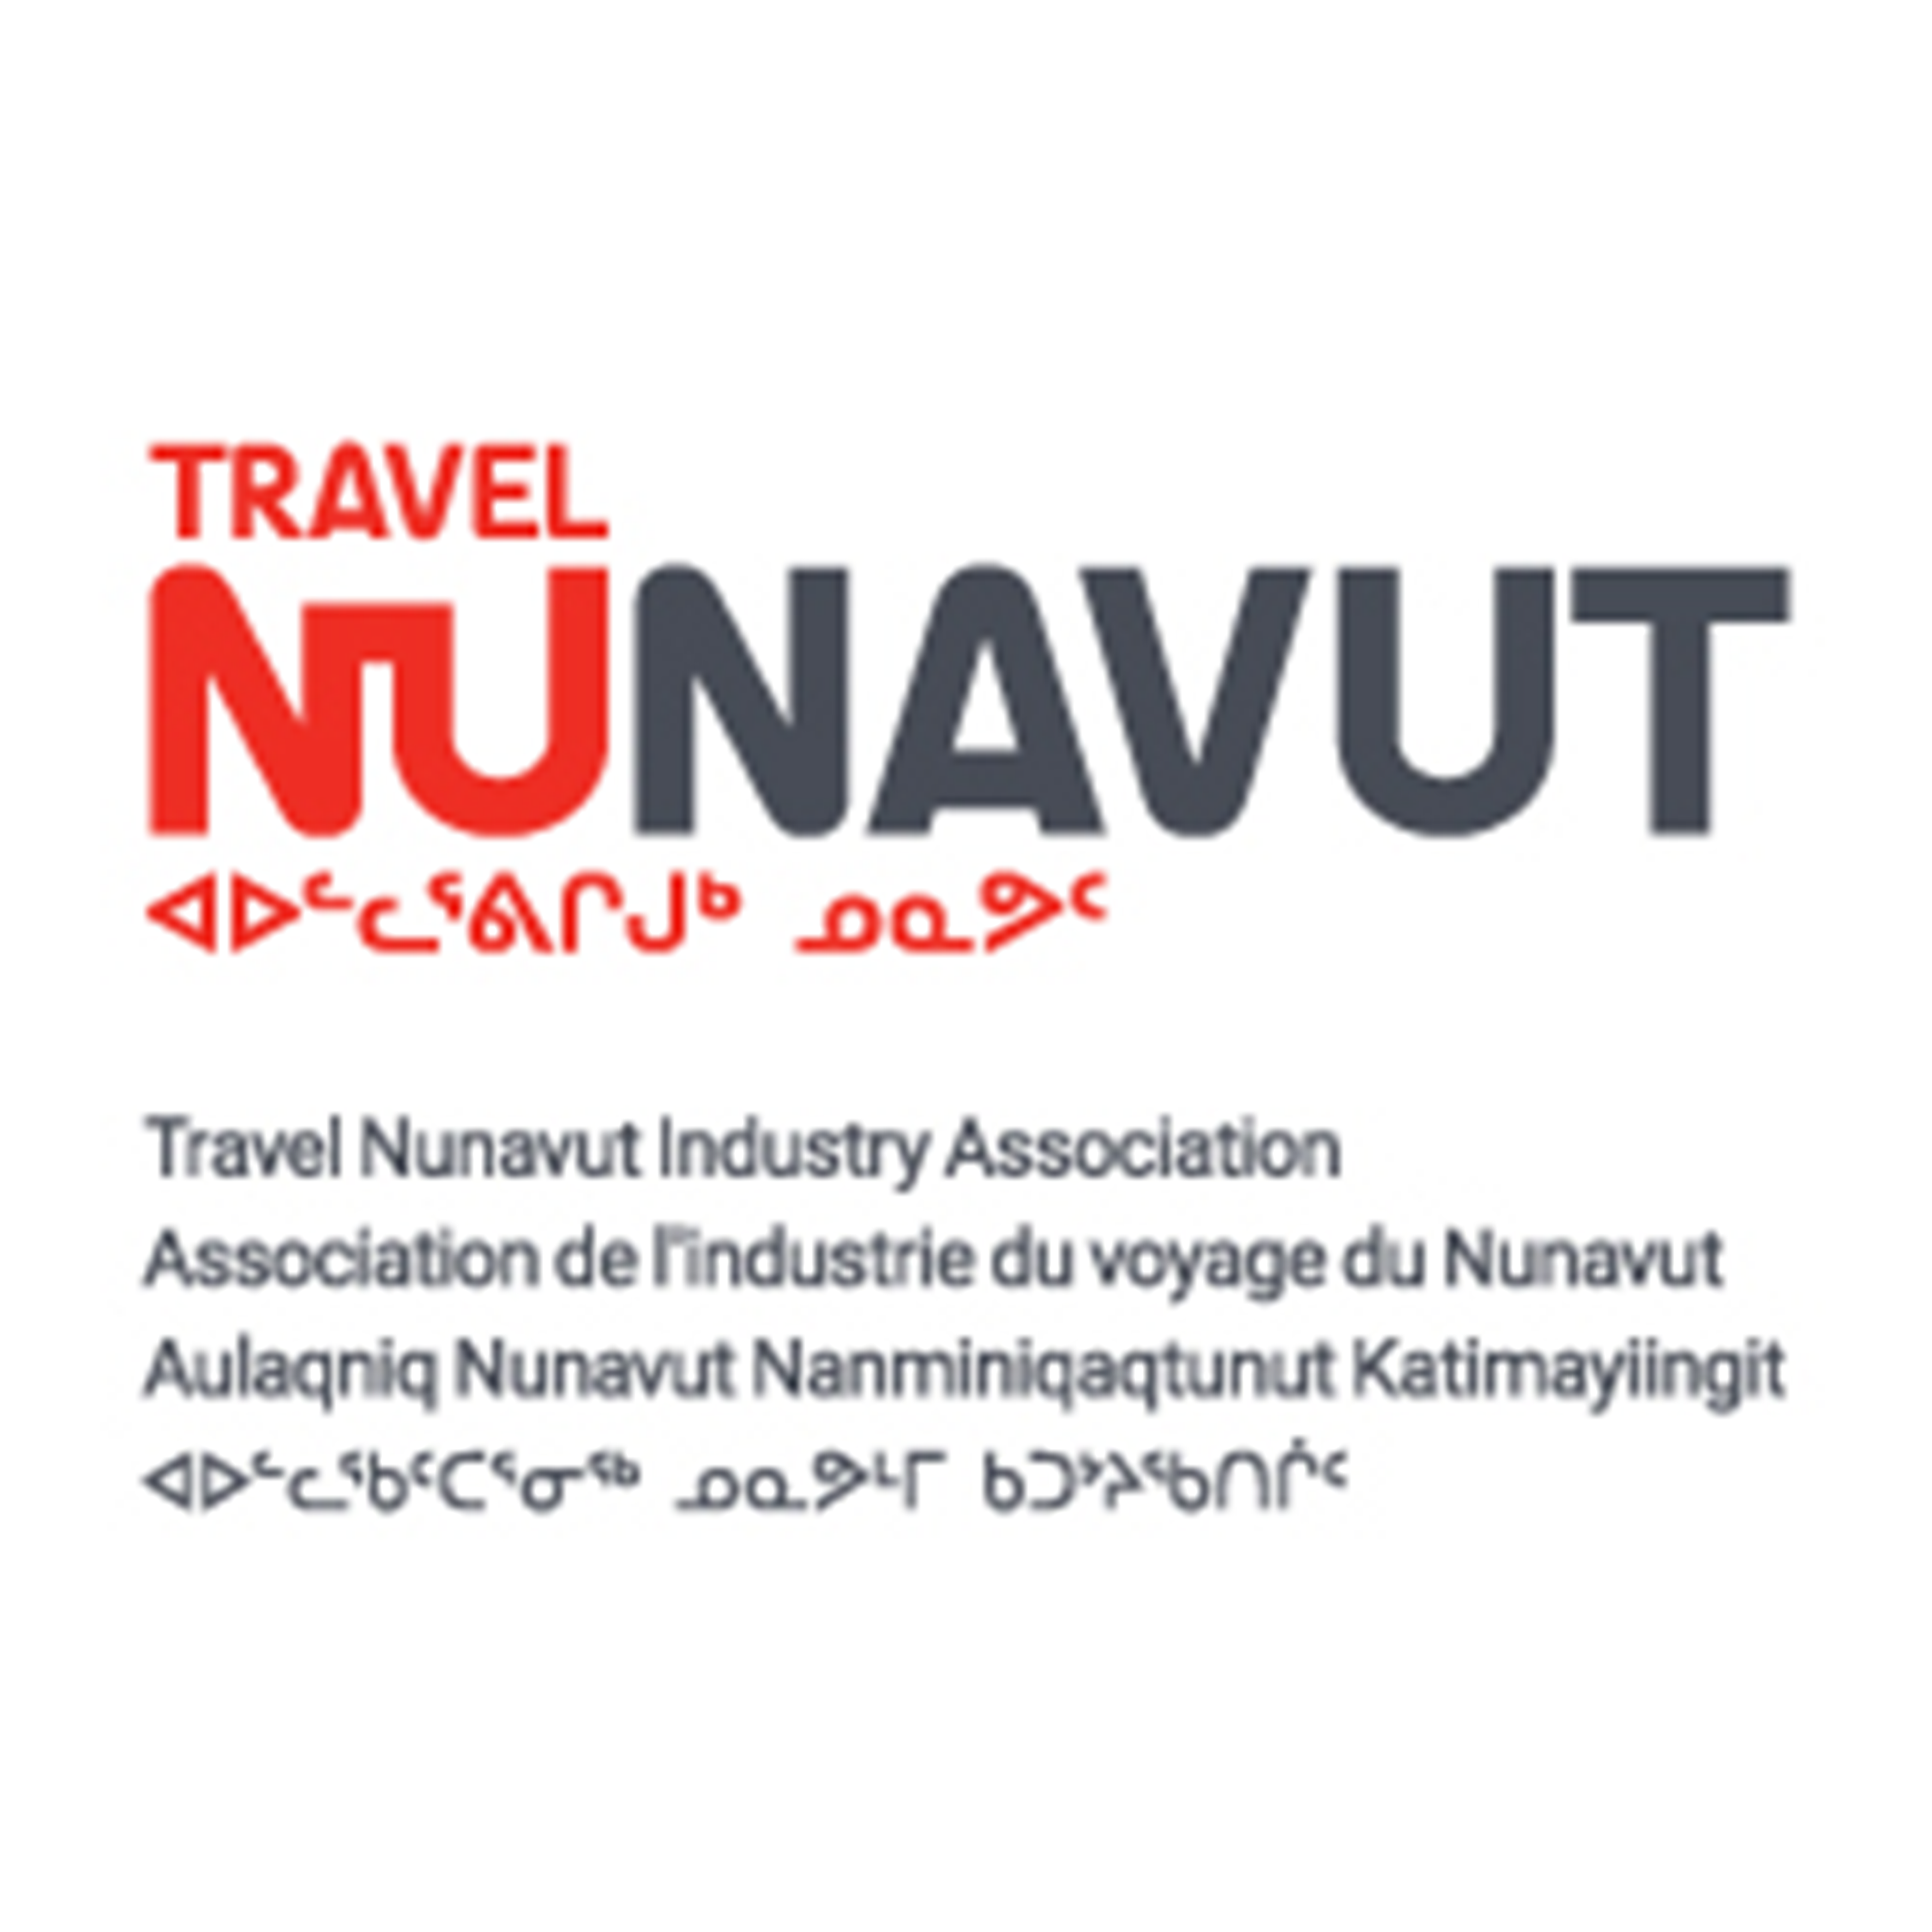 Travel Nunavut Industry Association